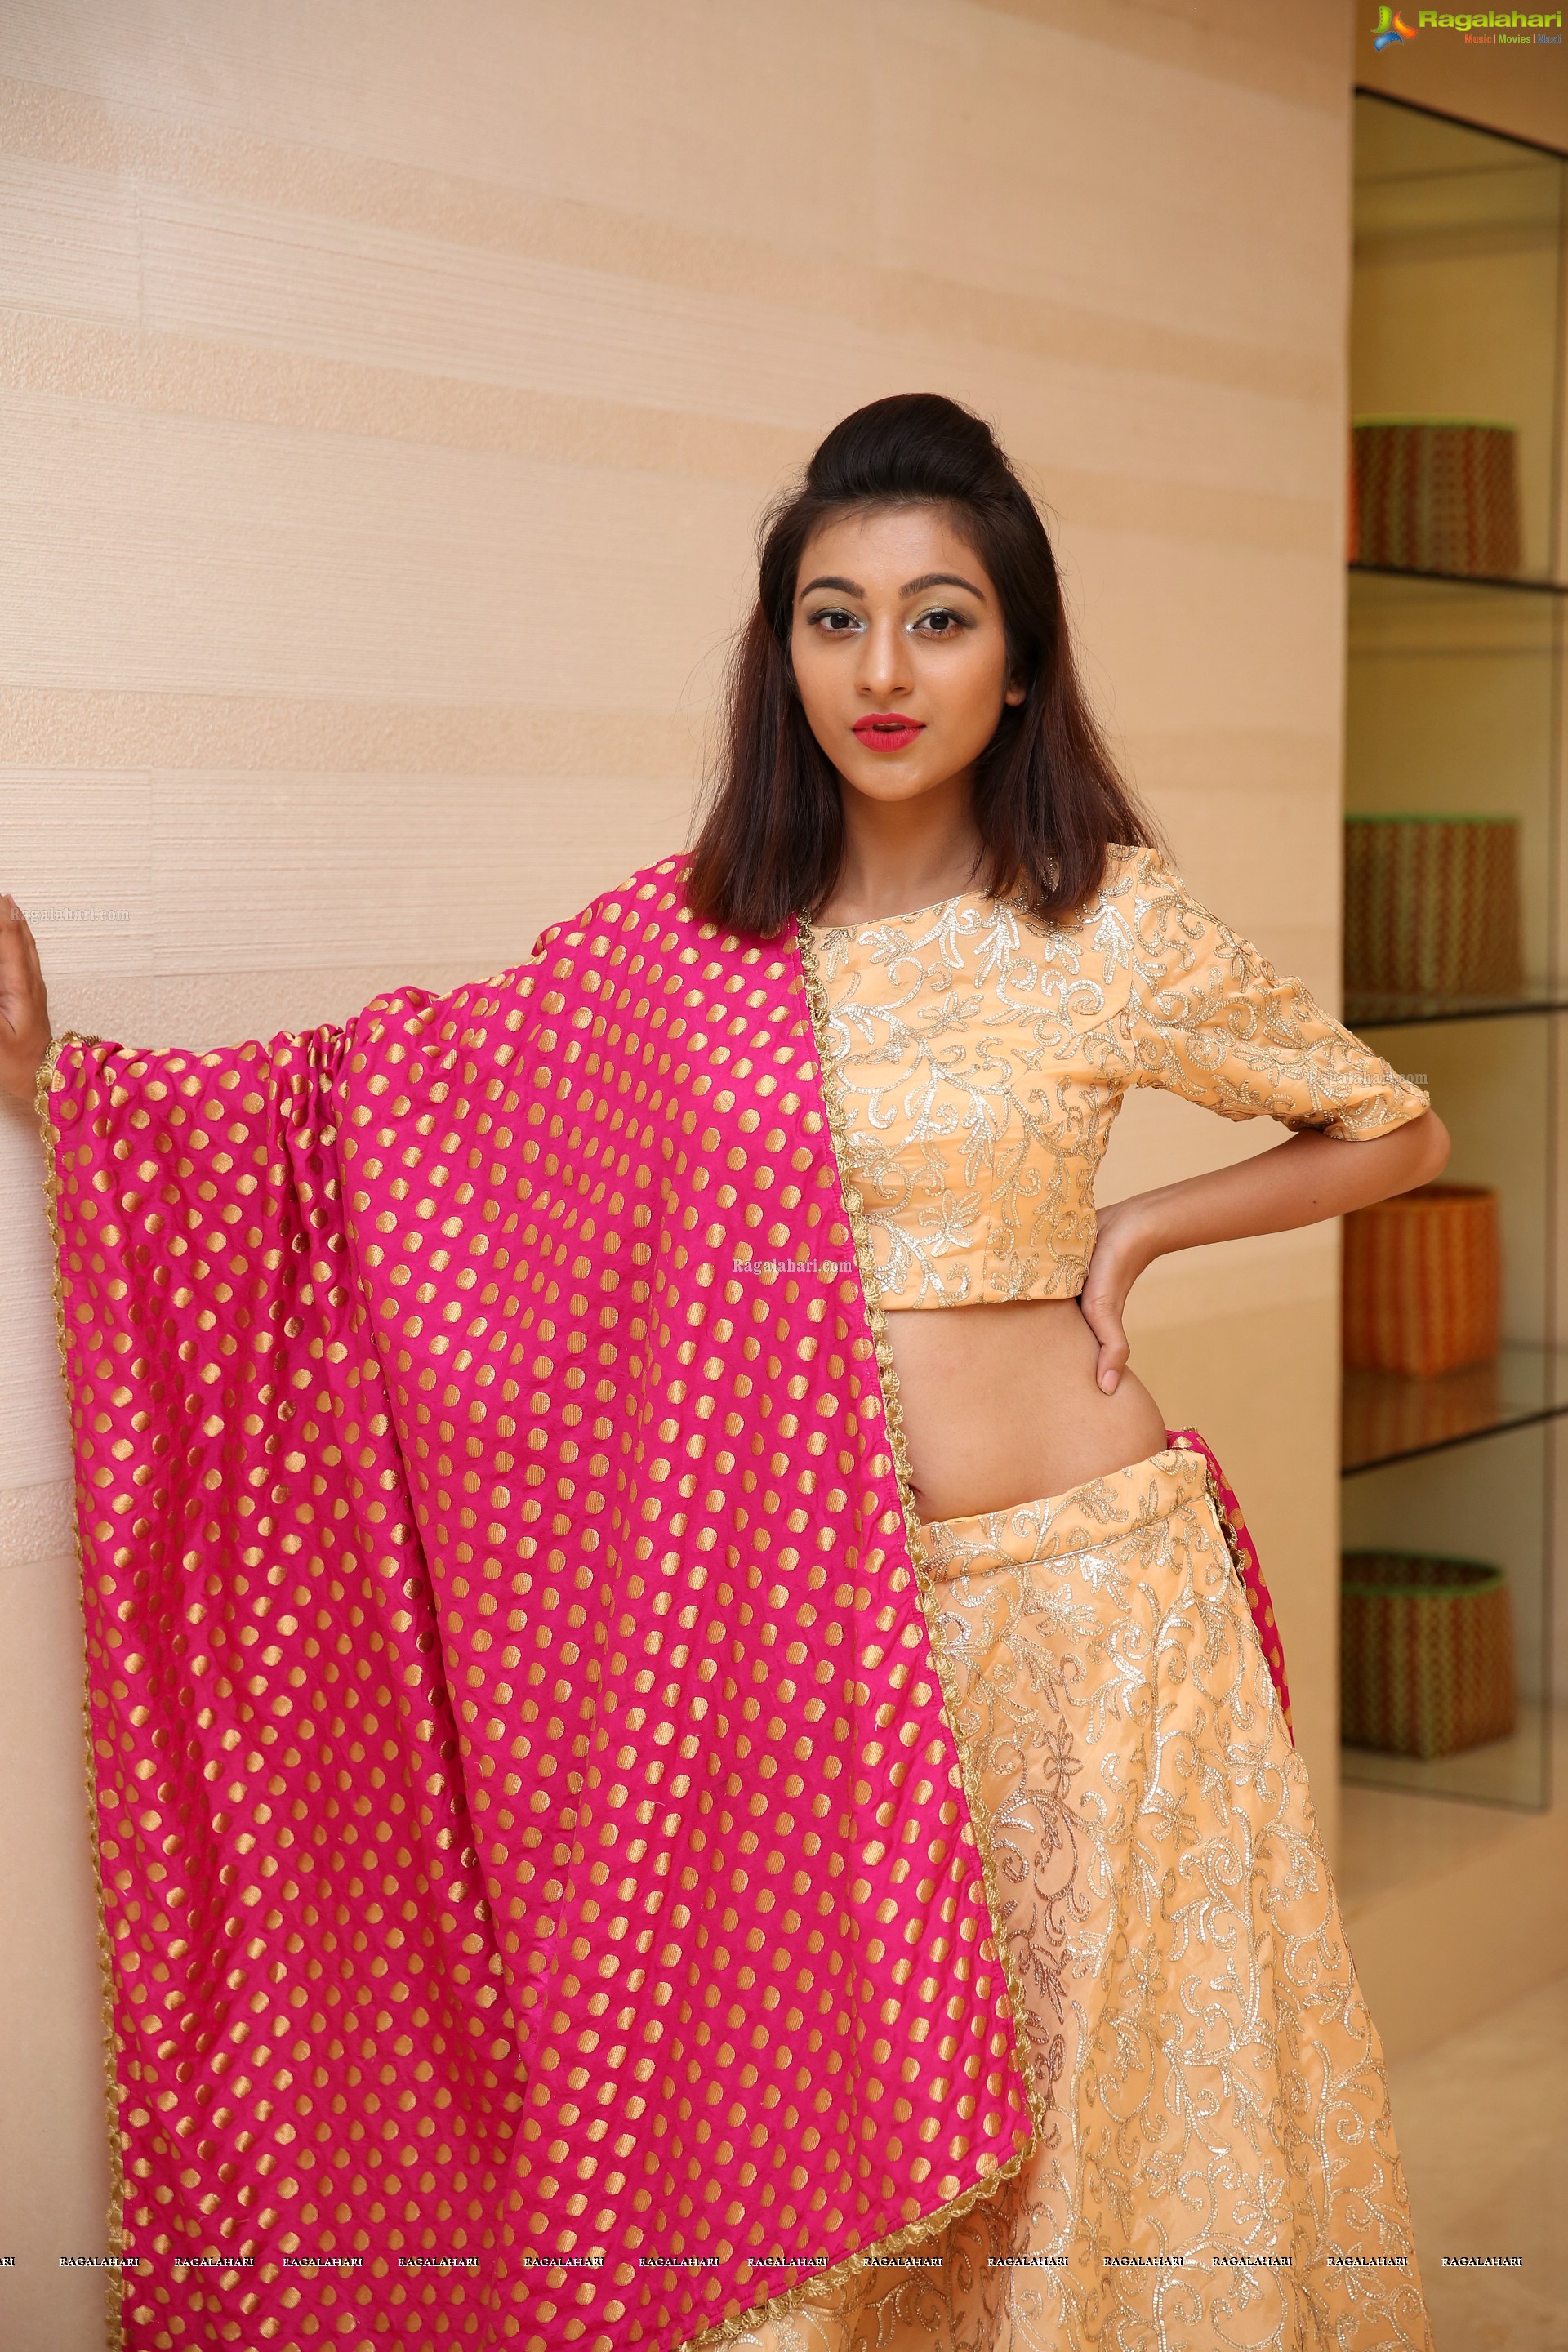 Insha Iqbal at Style Bazaar Exhibition & Sale Curtain Raiser - HD Gallery